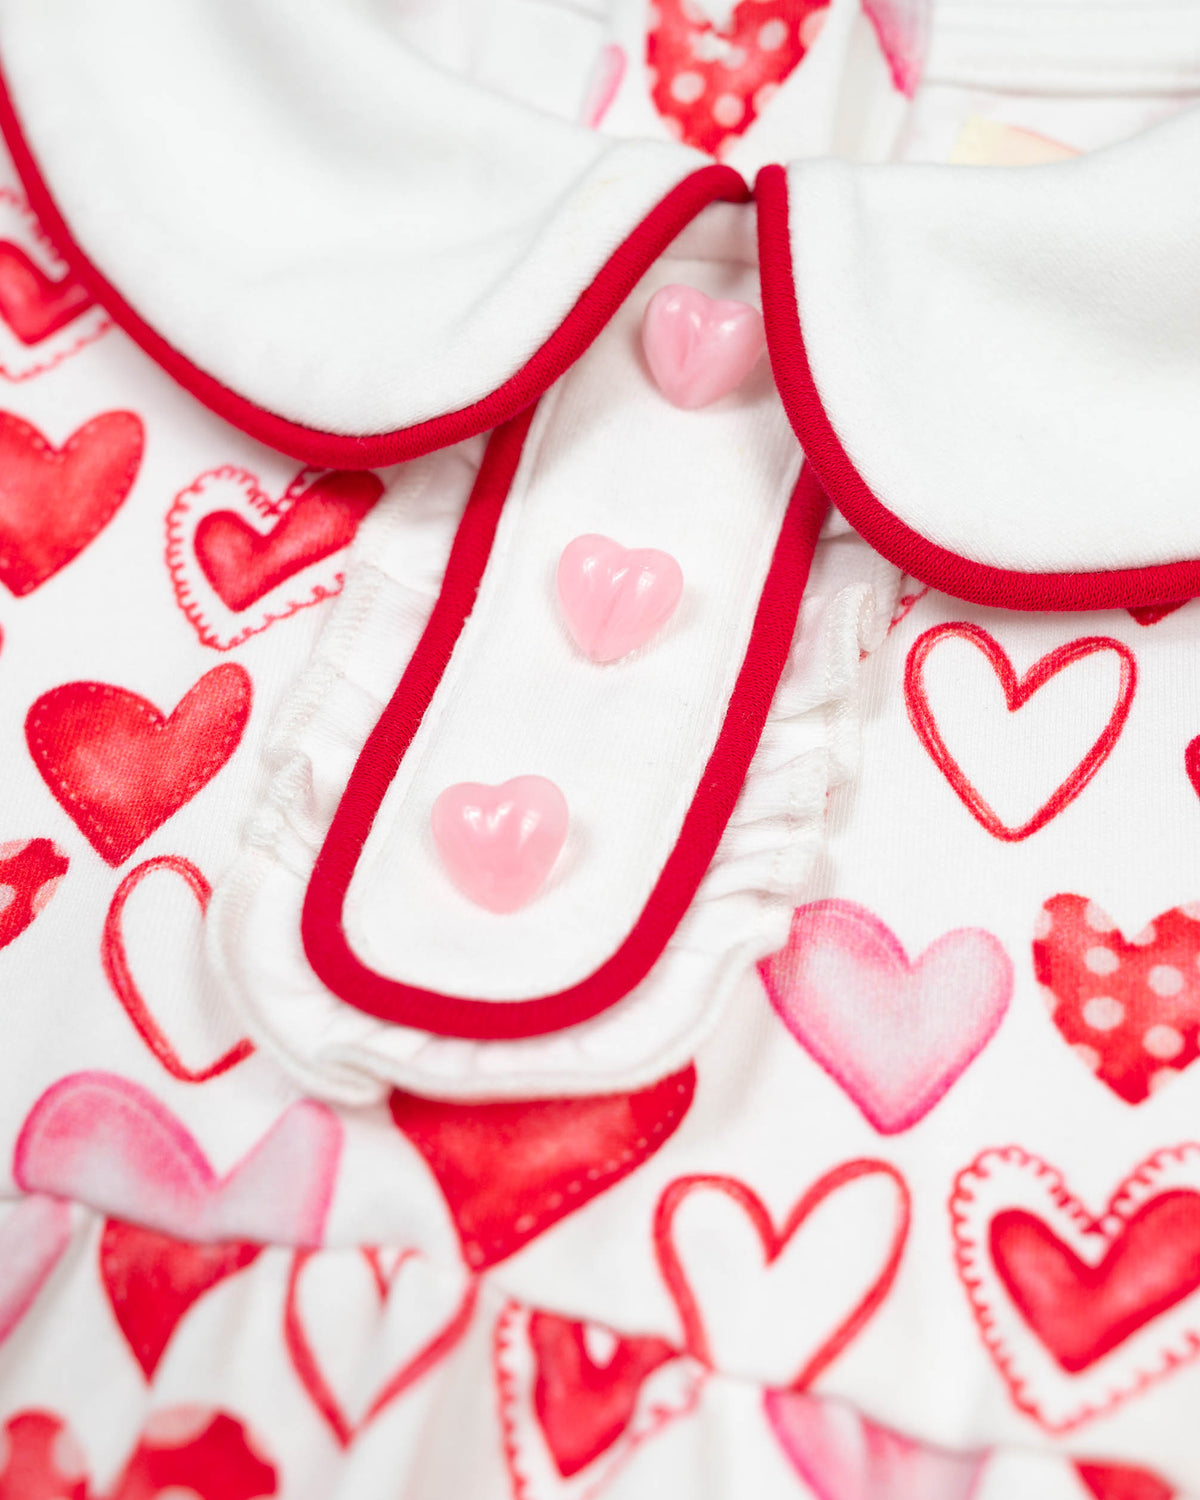 Whimsical Hearts Knit Bubble- FINAL SALE